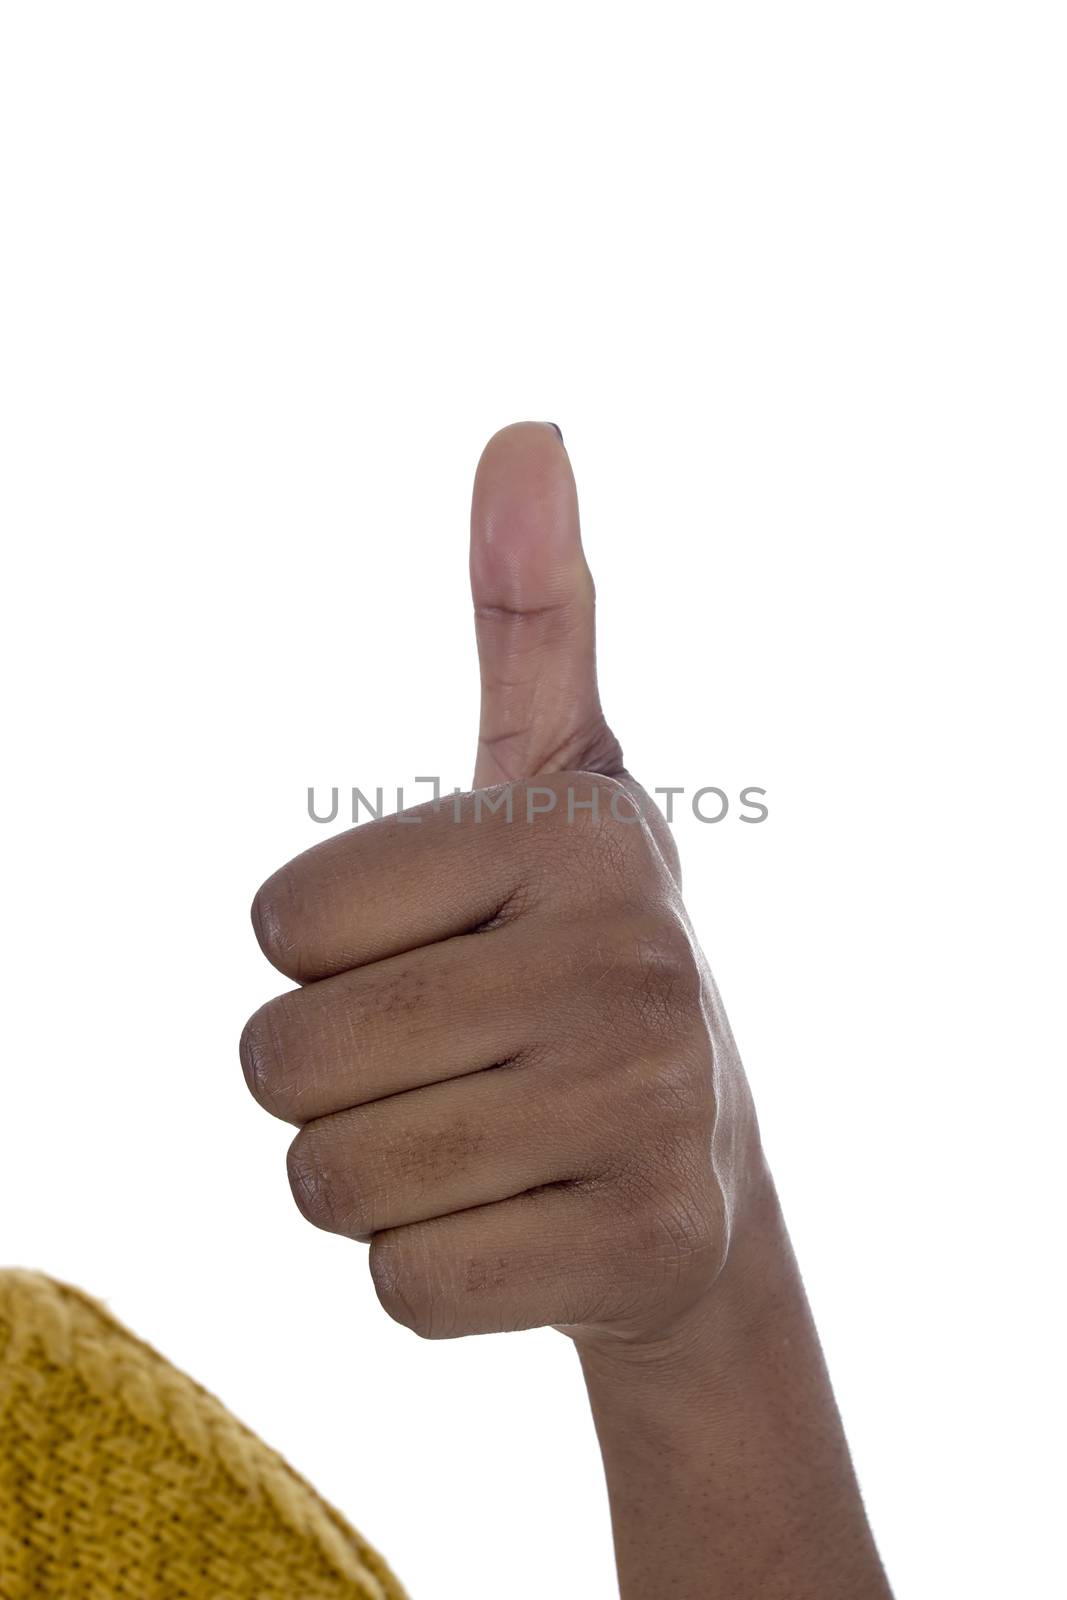 African american hand making thumbs up gesture - Black people